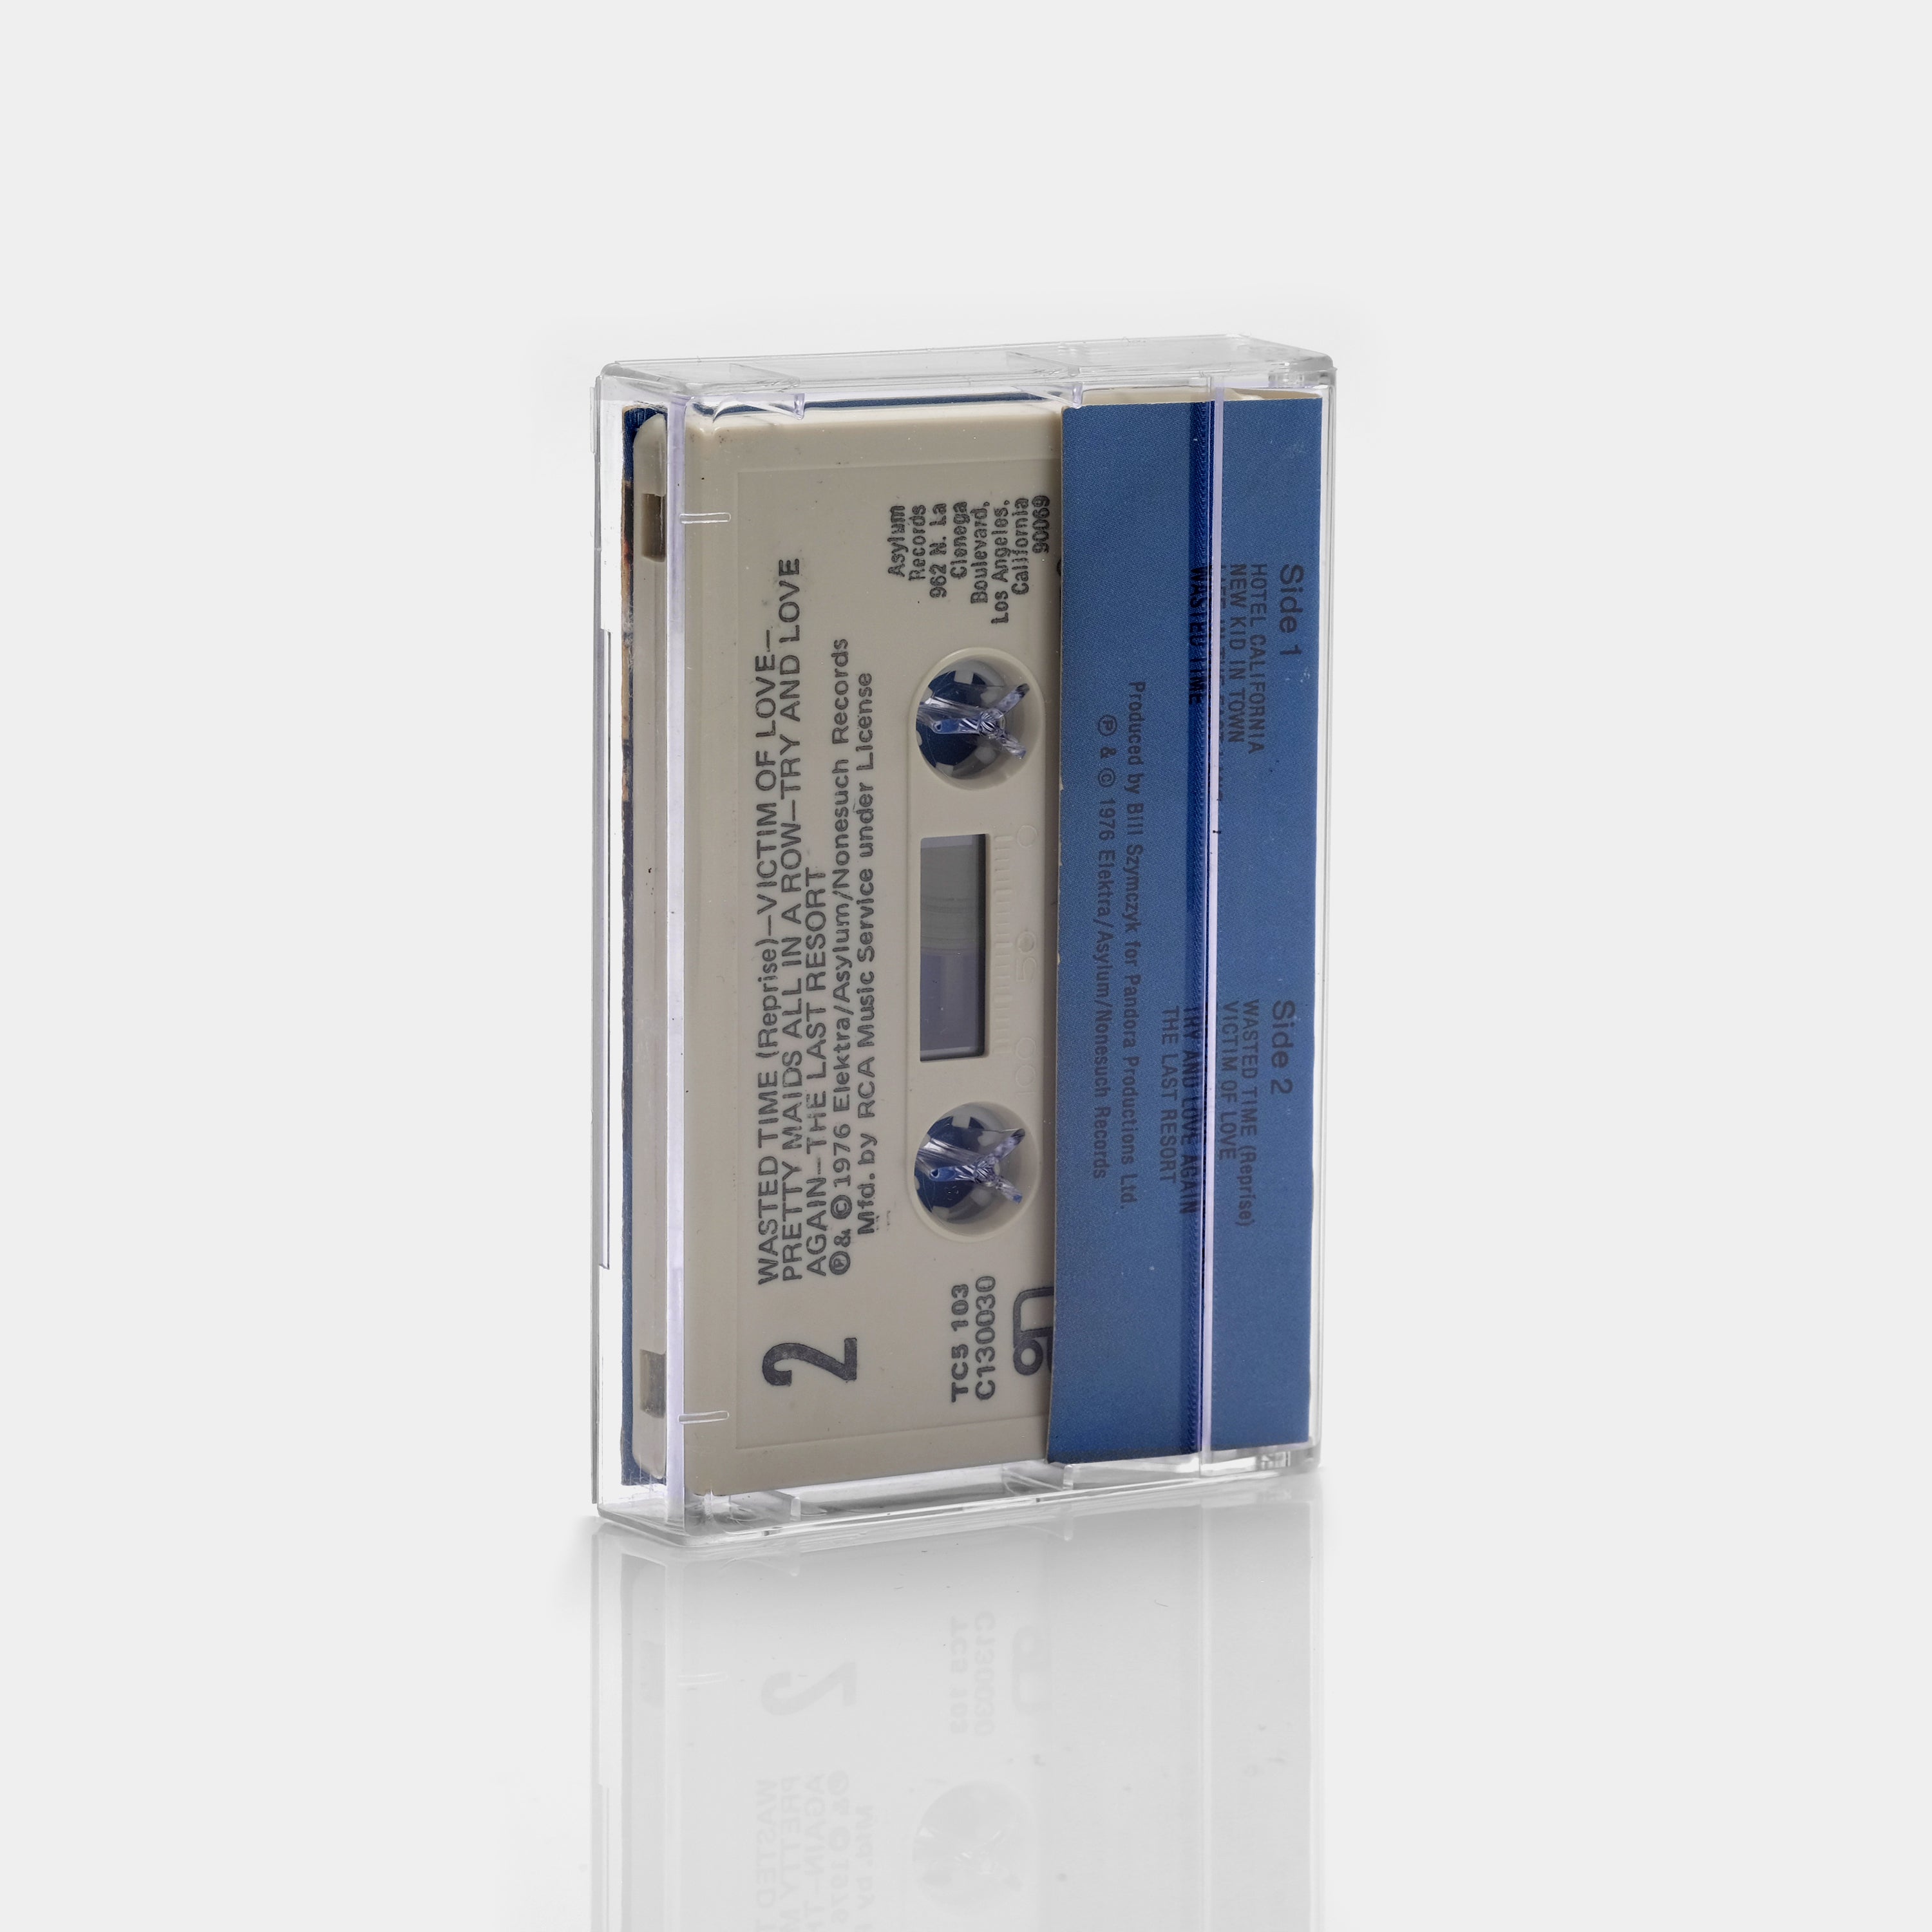 Eagles - Hotel California Cassette Tape